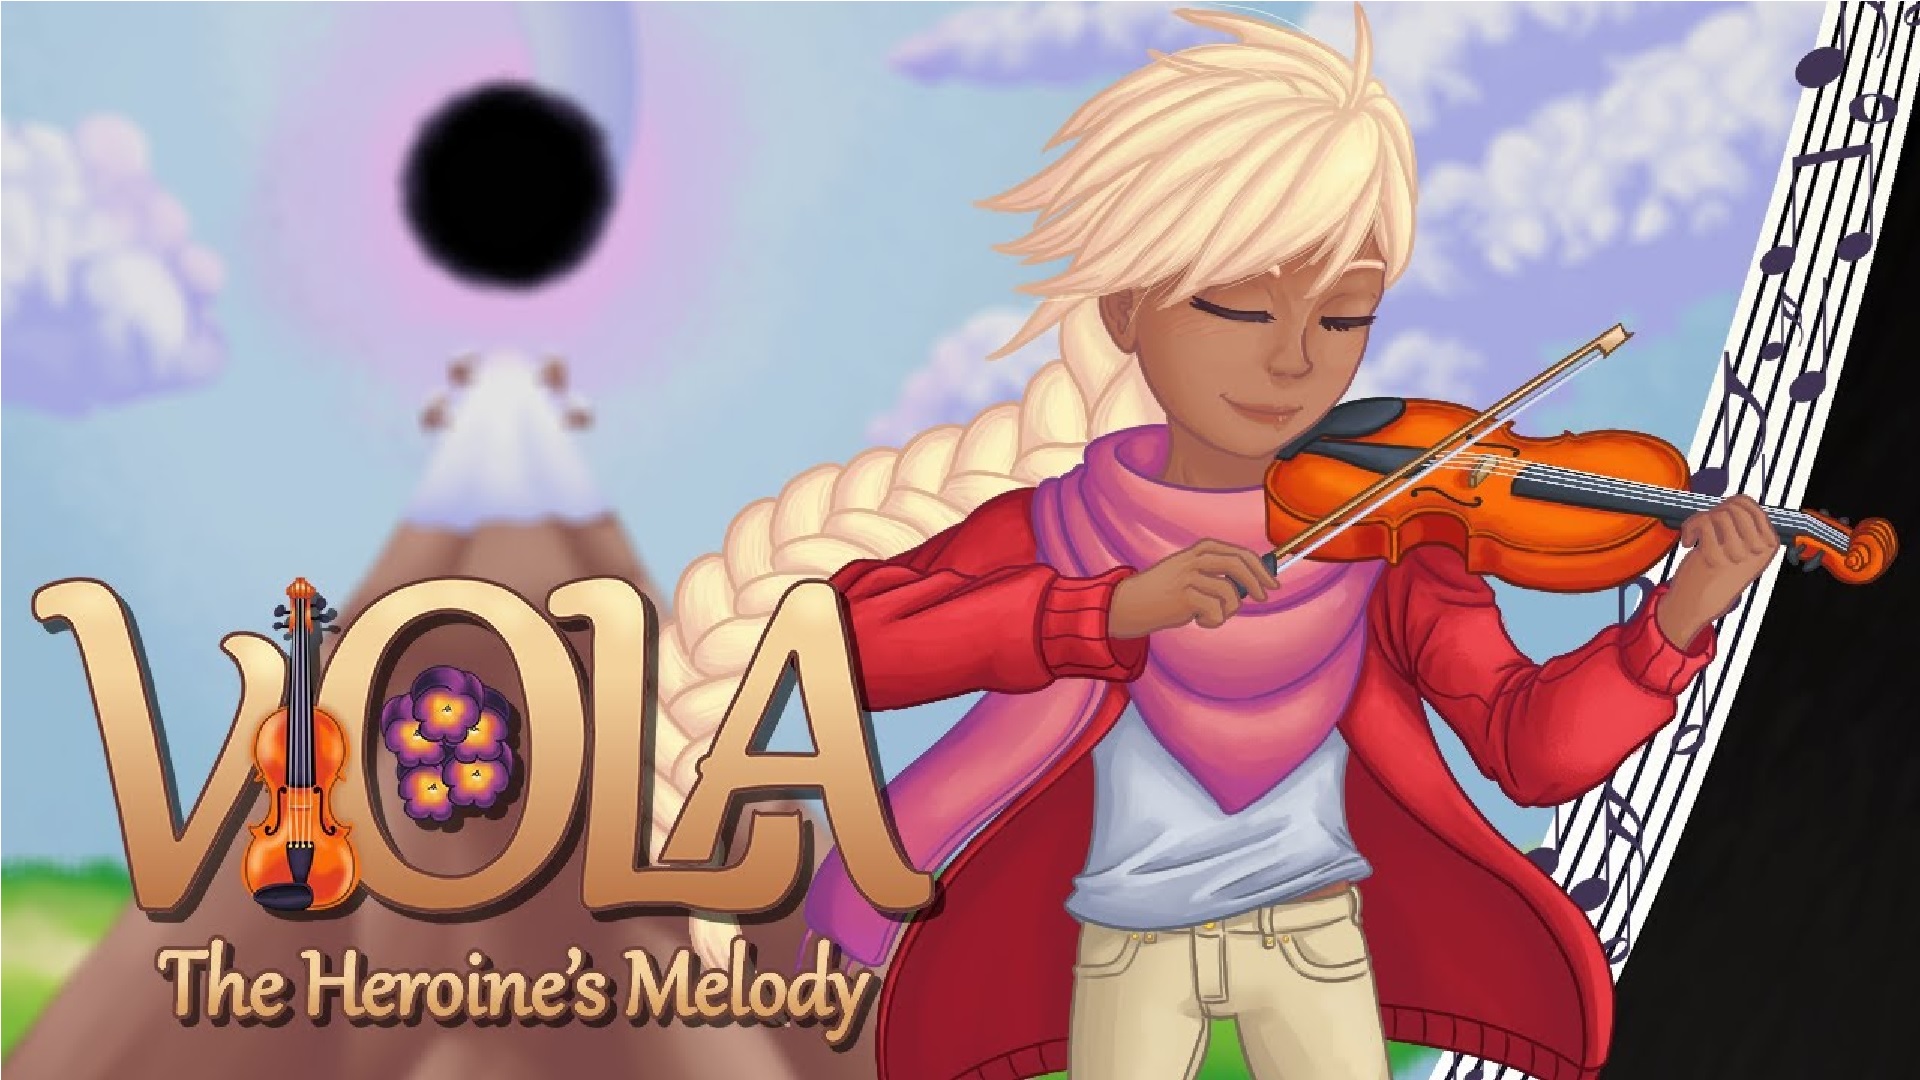 Viola The Heroine's Melody